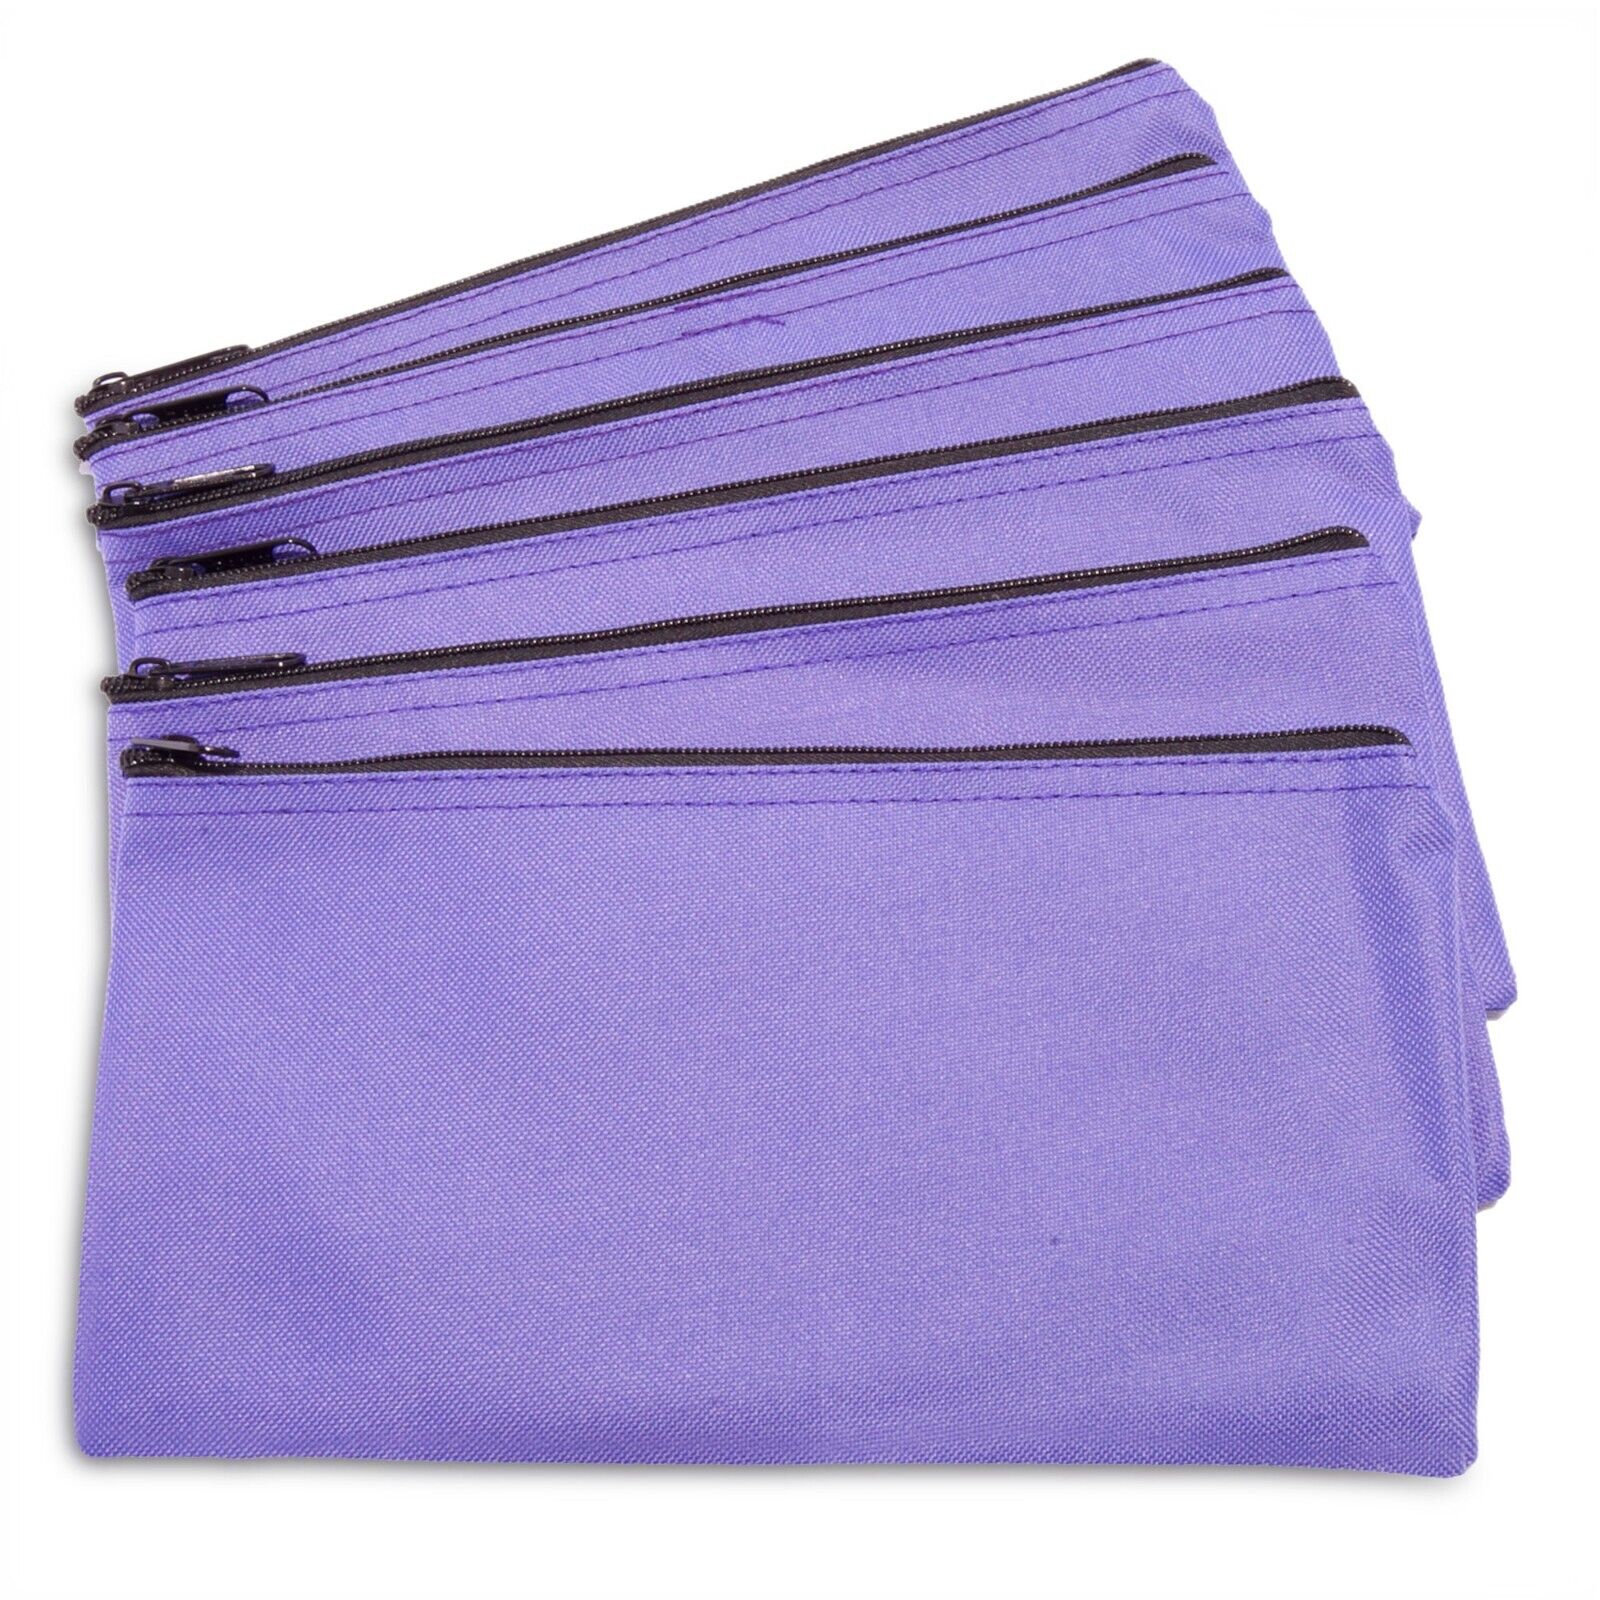 DALIX Zipper Bank Deposit Money Bags Cash Coin Pouch 6 Pack in Purple